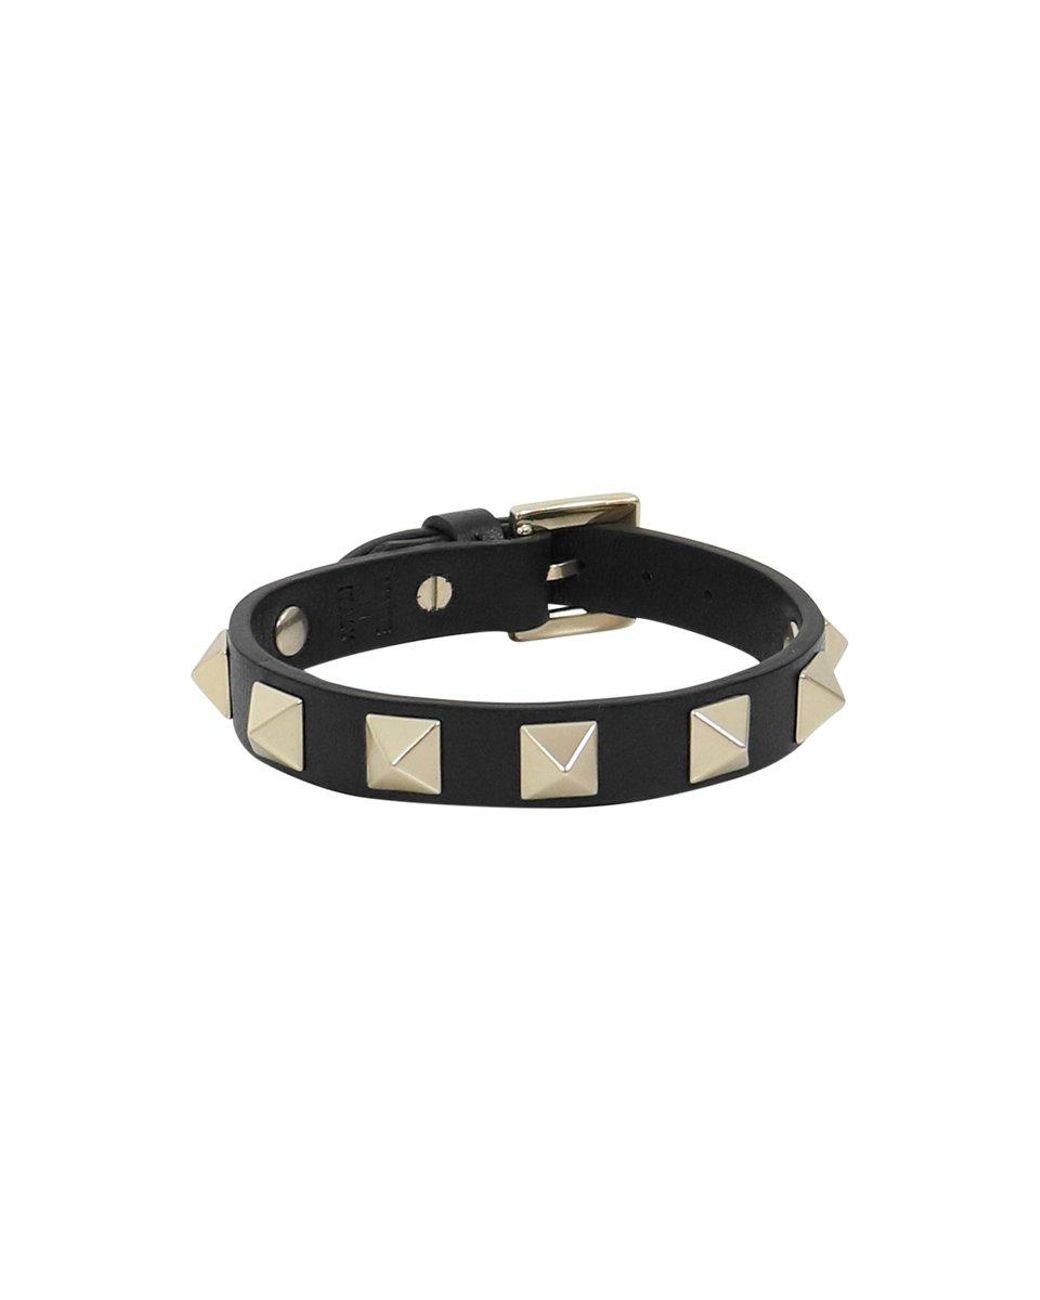 Valentino Garavani Rockstud Leather Bracelet in Black - Save 59% - Lyst